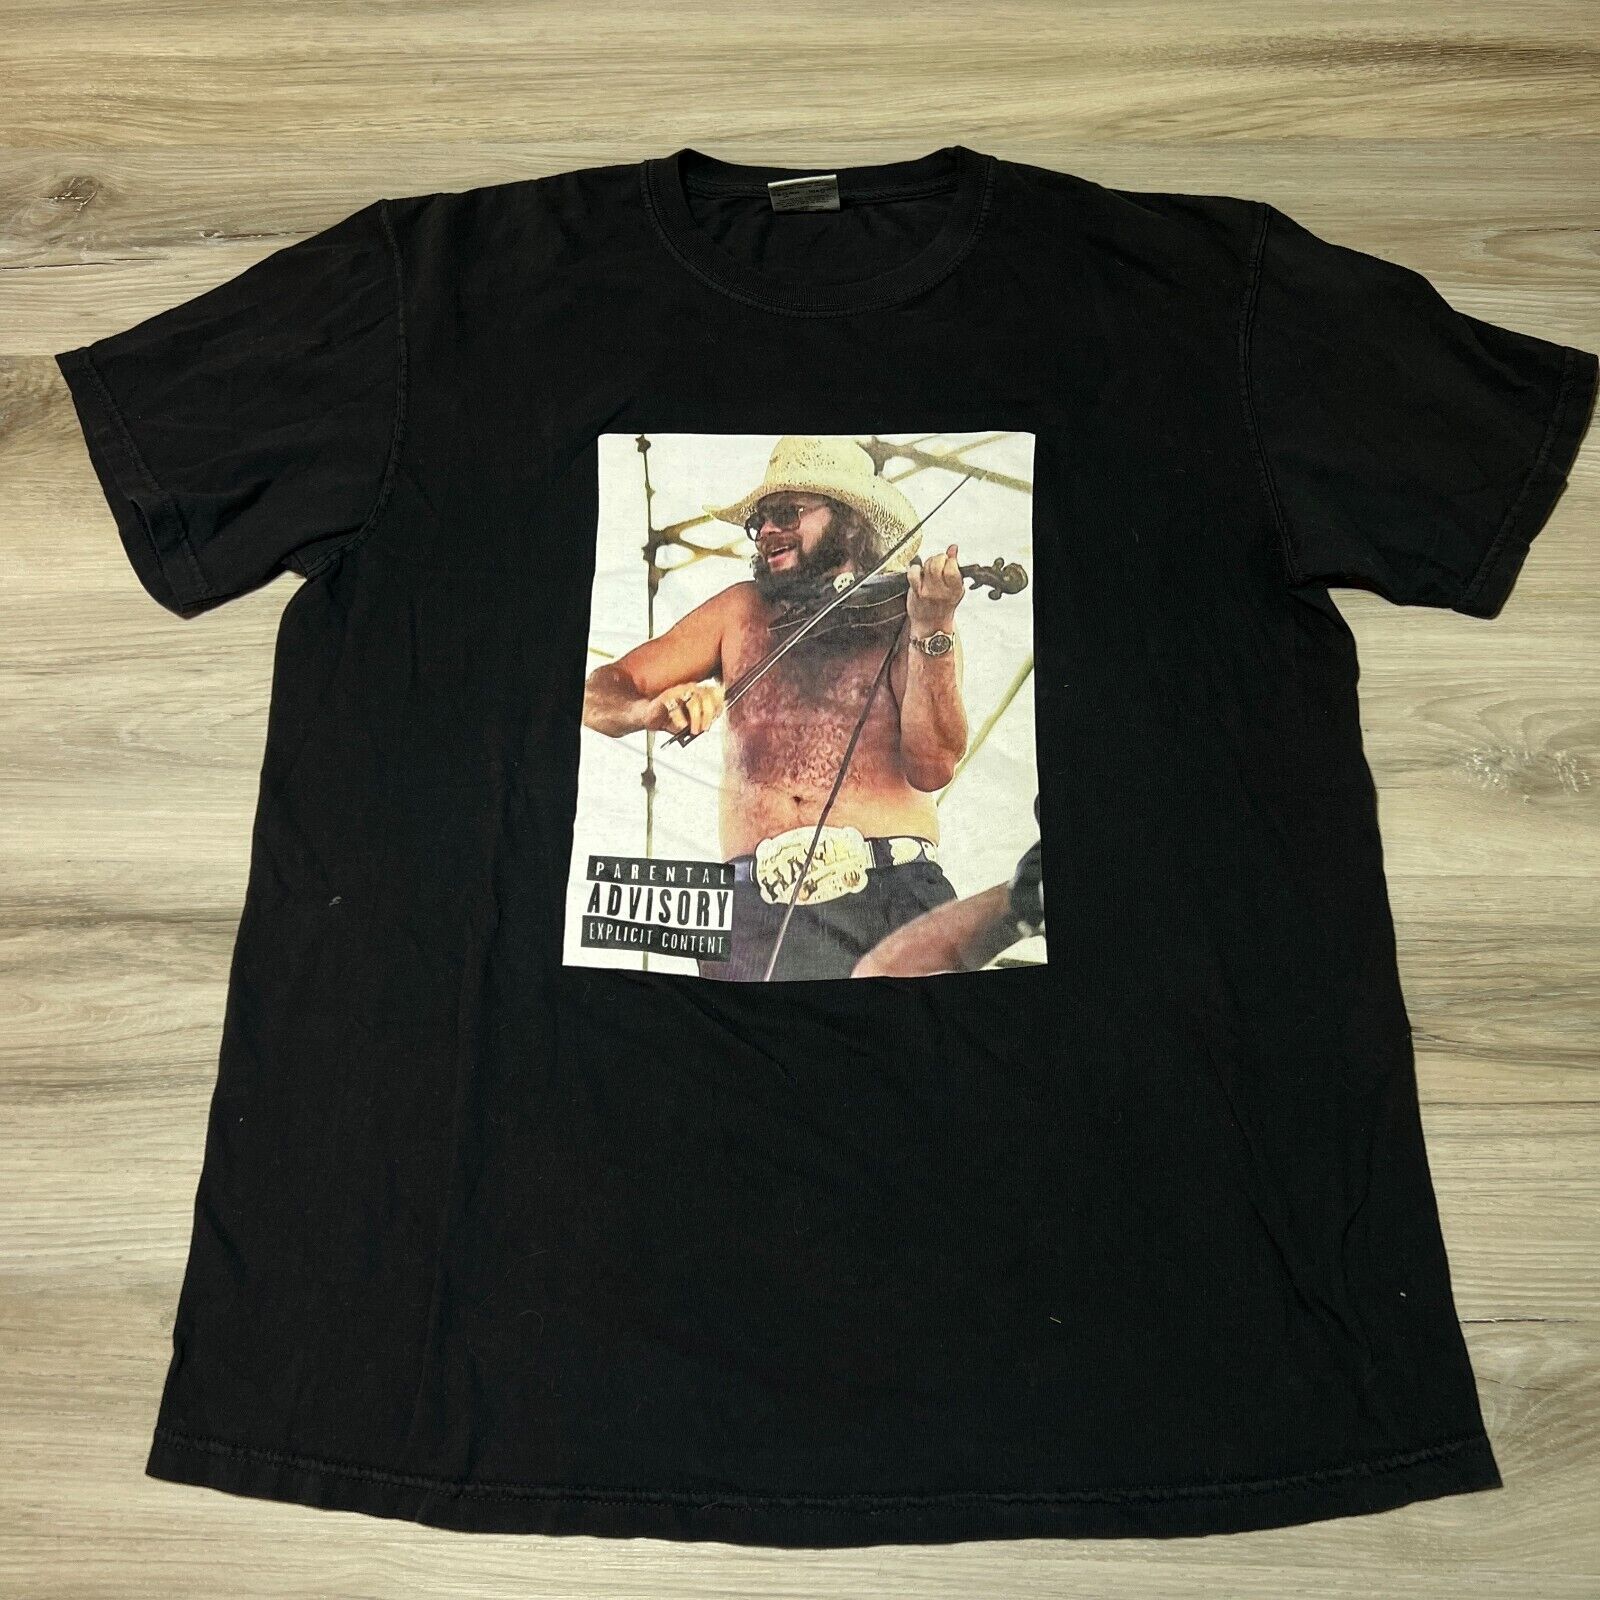 Vintage Hank Williams Jr Shirt Mens Large Black Short Sleeve Album Cover 90s